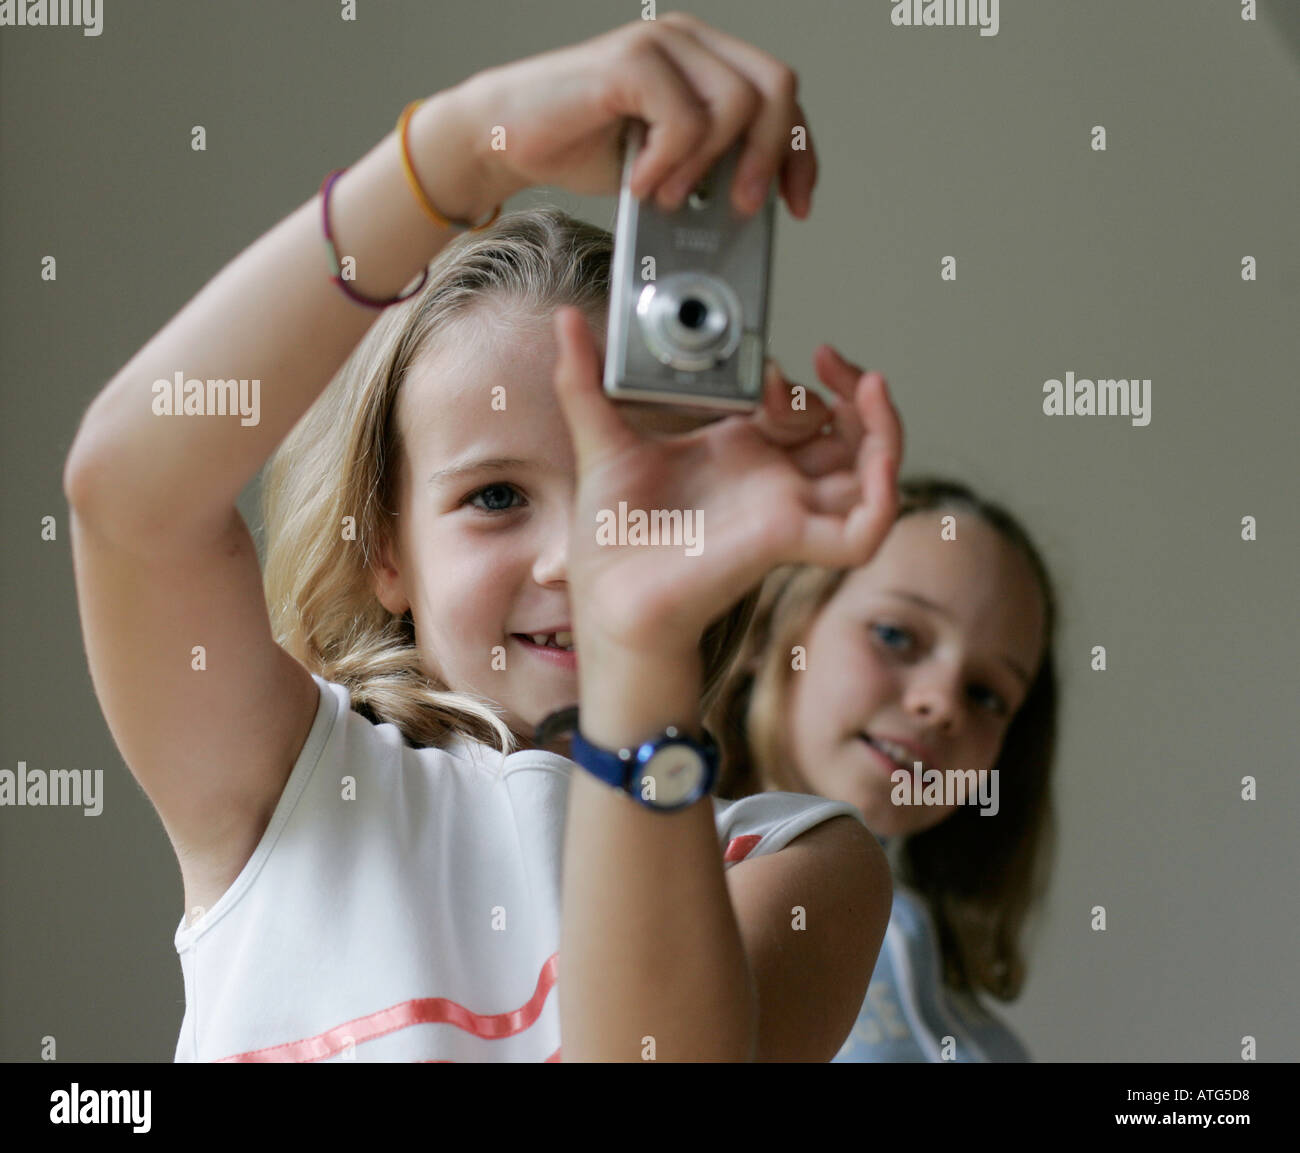 girls take photos with a digital camera Stock Photo